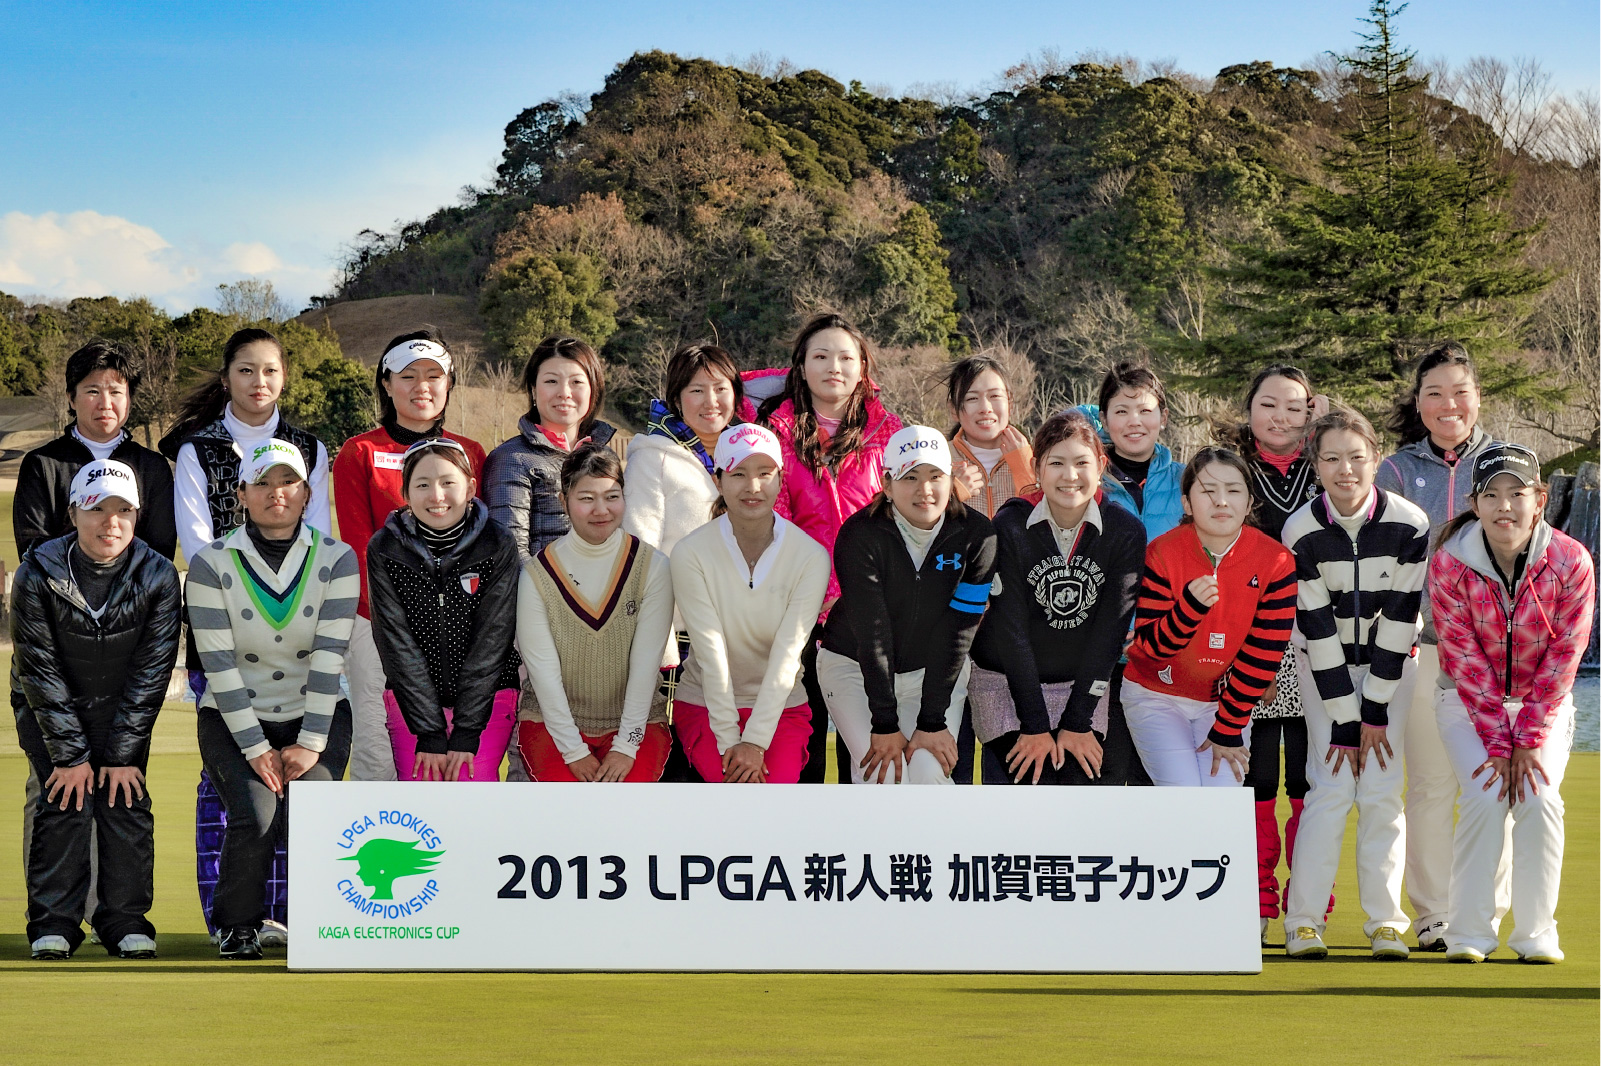 2013 LPGA 新人戦加賀電子カップ